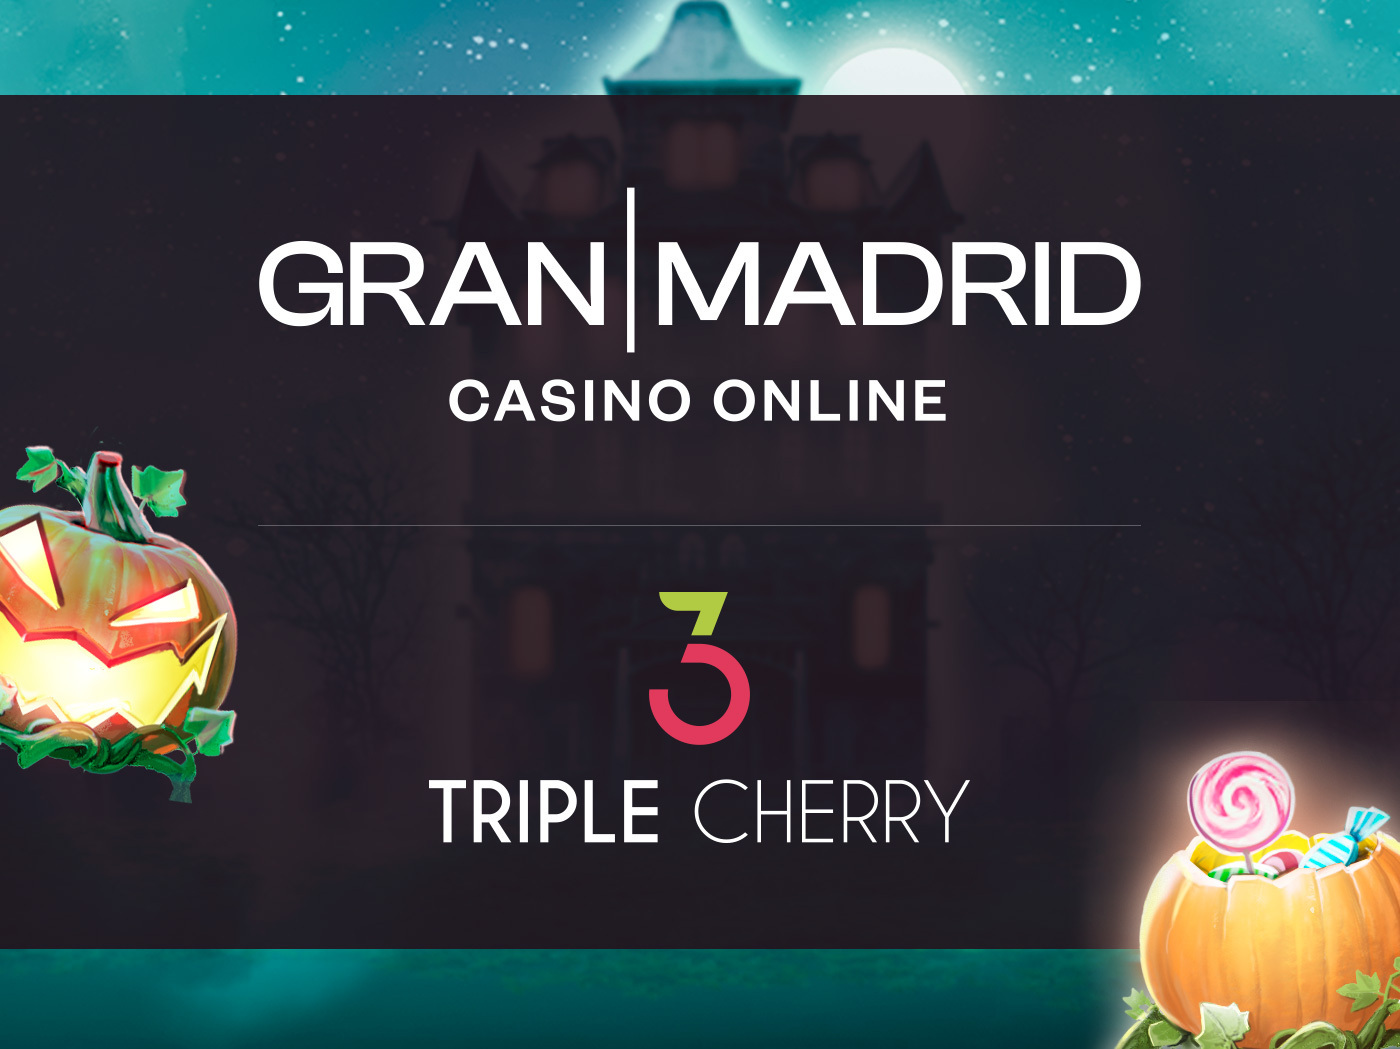 Gran Madrid - Casino Online and Triple Cherry Agreement